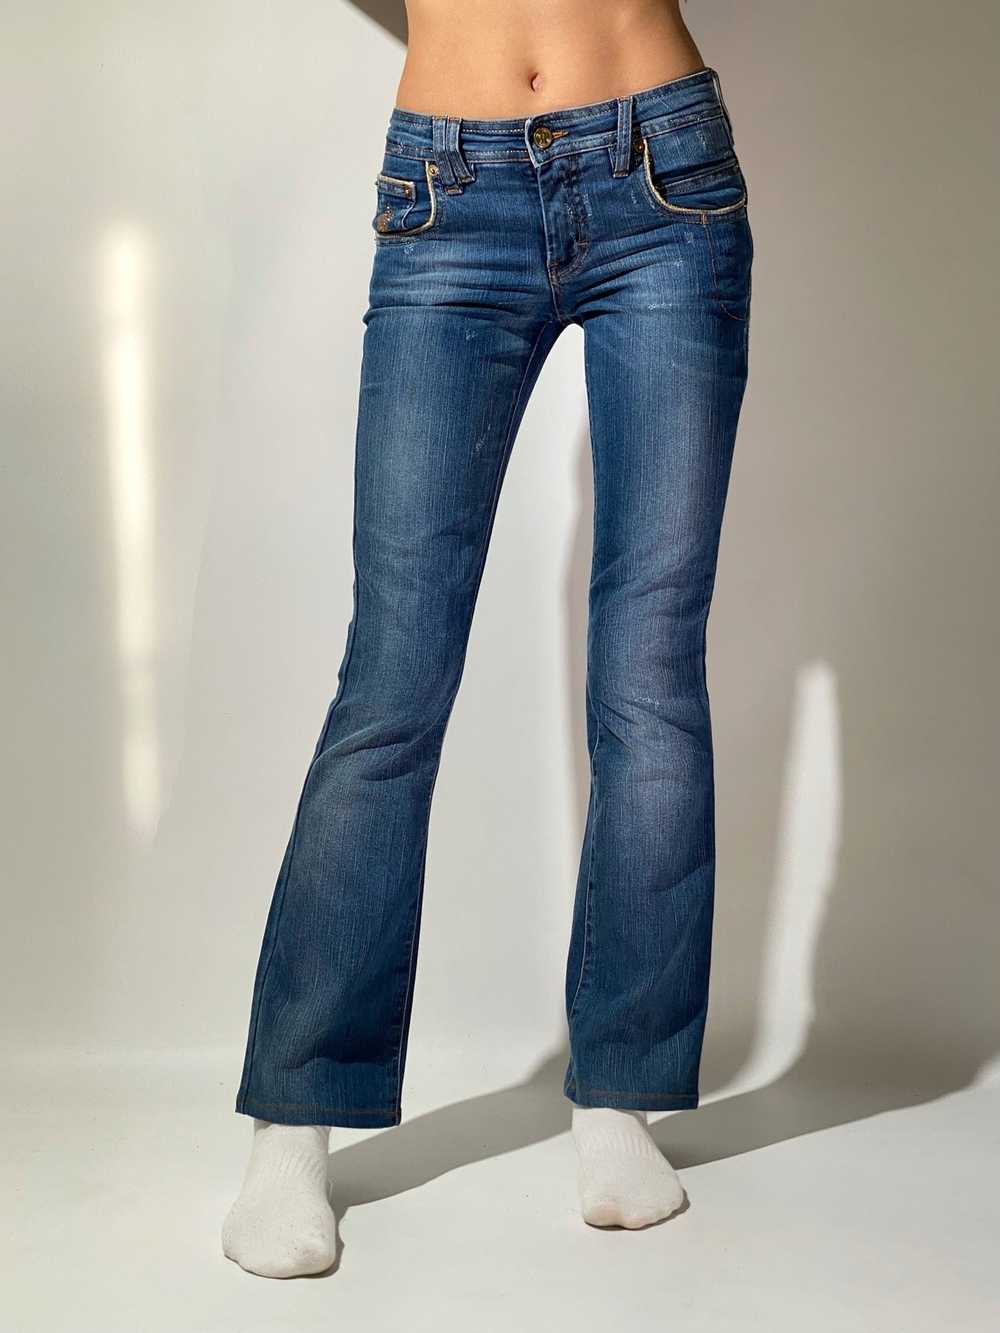 John Galliano John Galliano vintage blue jeans - image 4